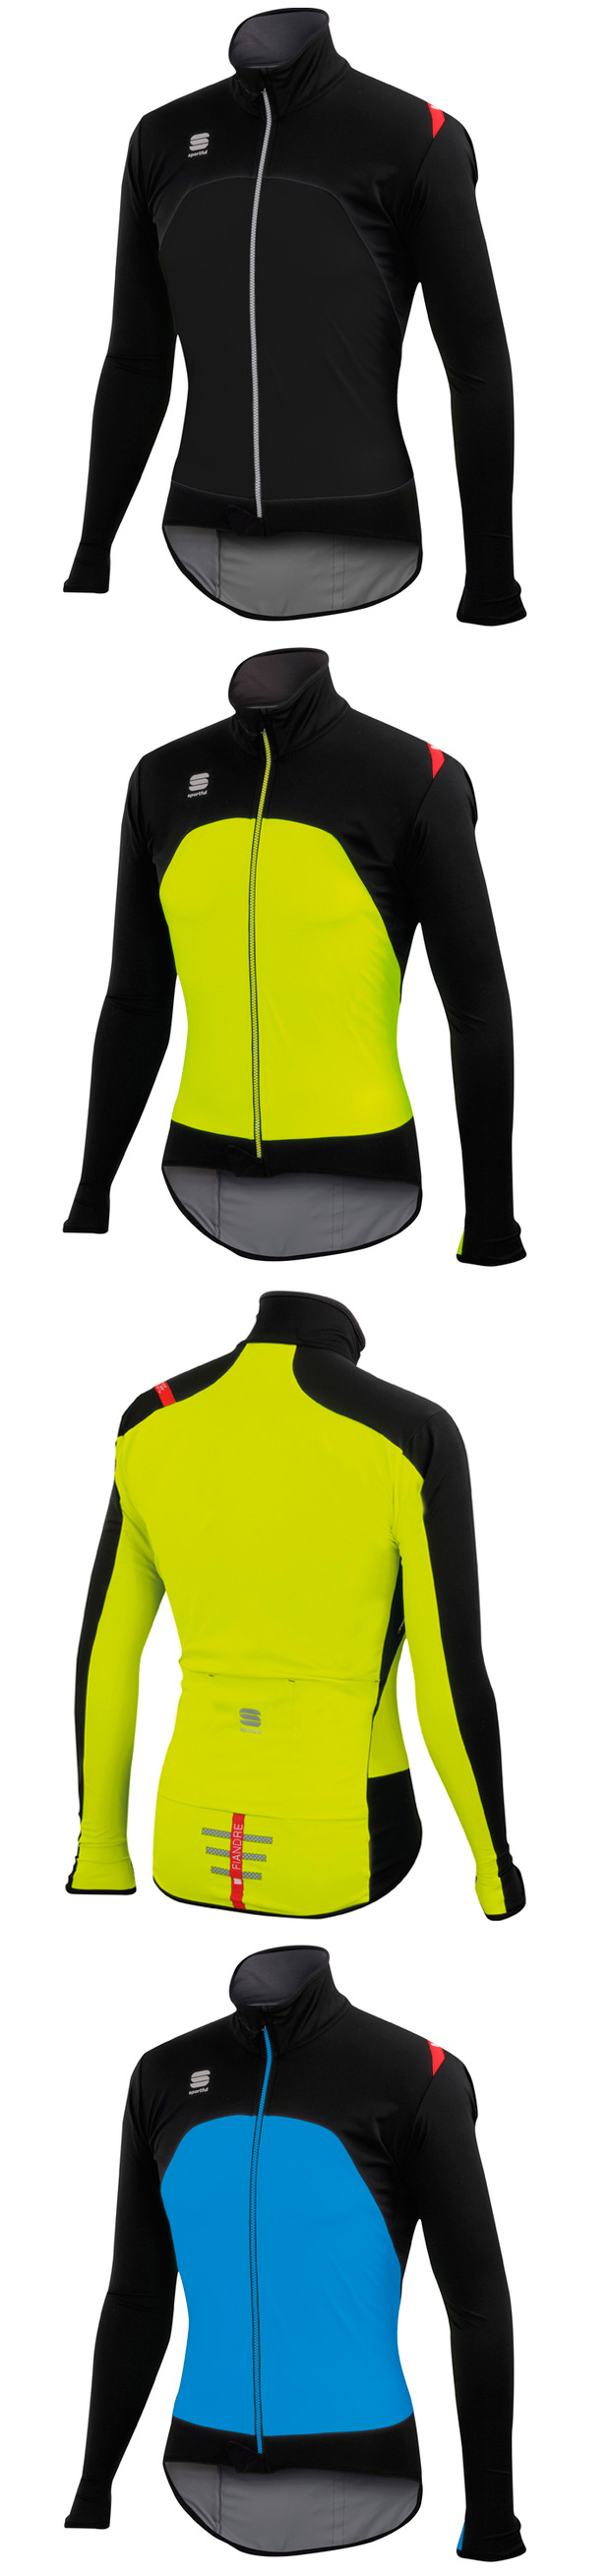 Sportful Fiandre Light WS, la chaqueta de invierno más ligera de la firma italiana